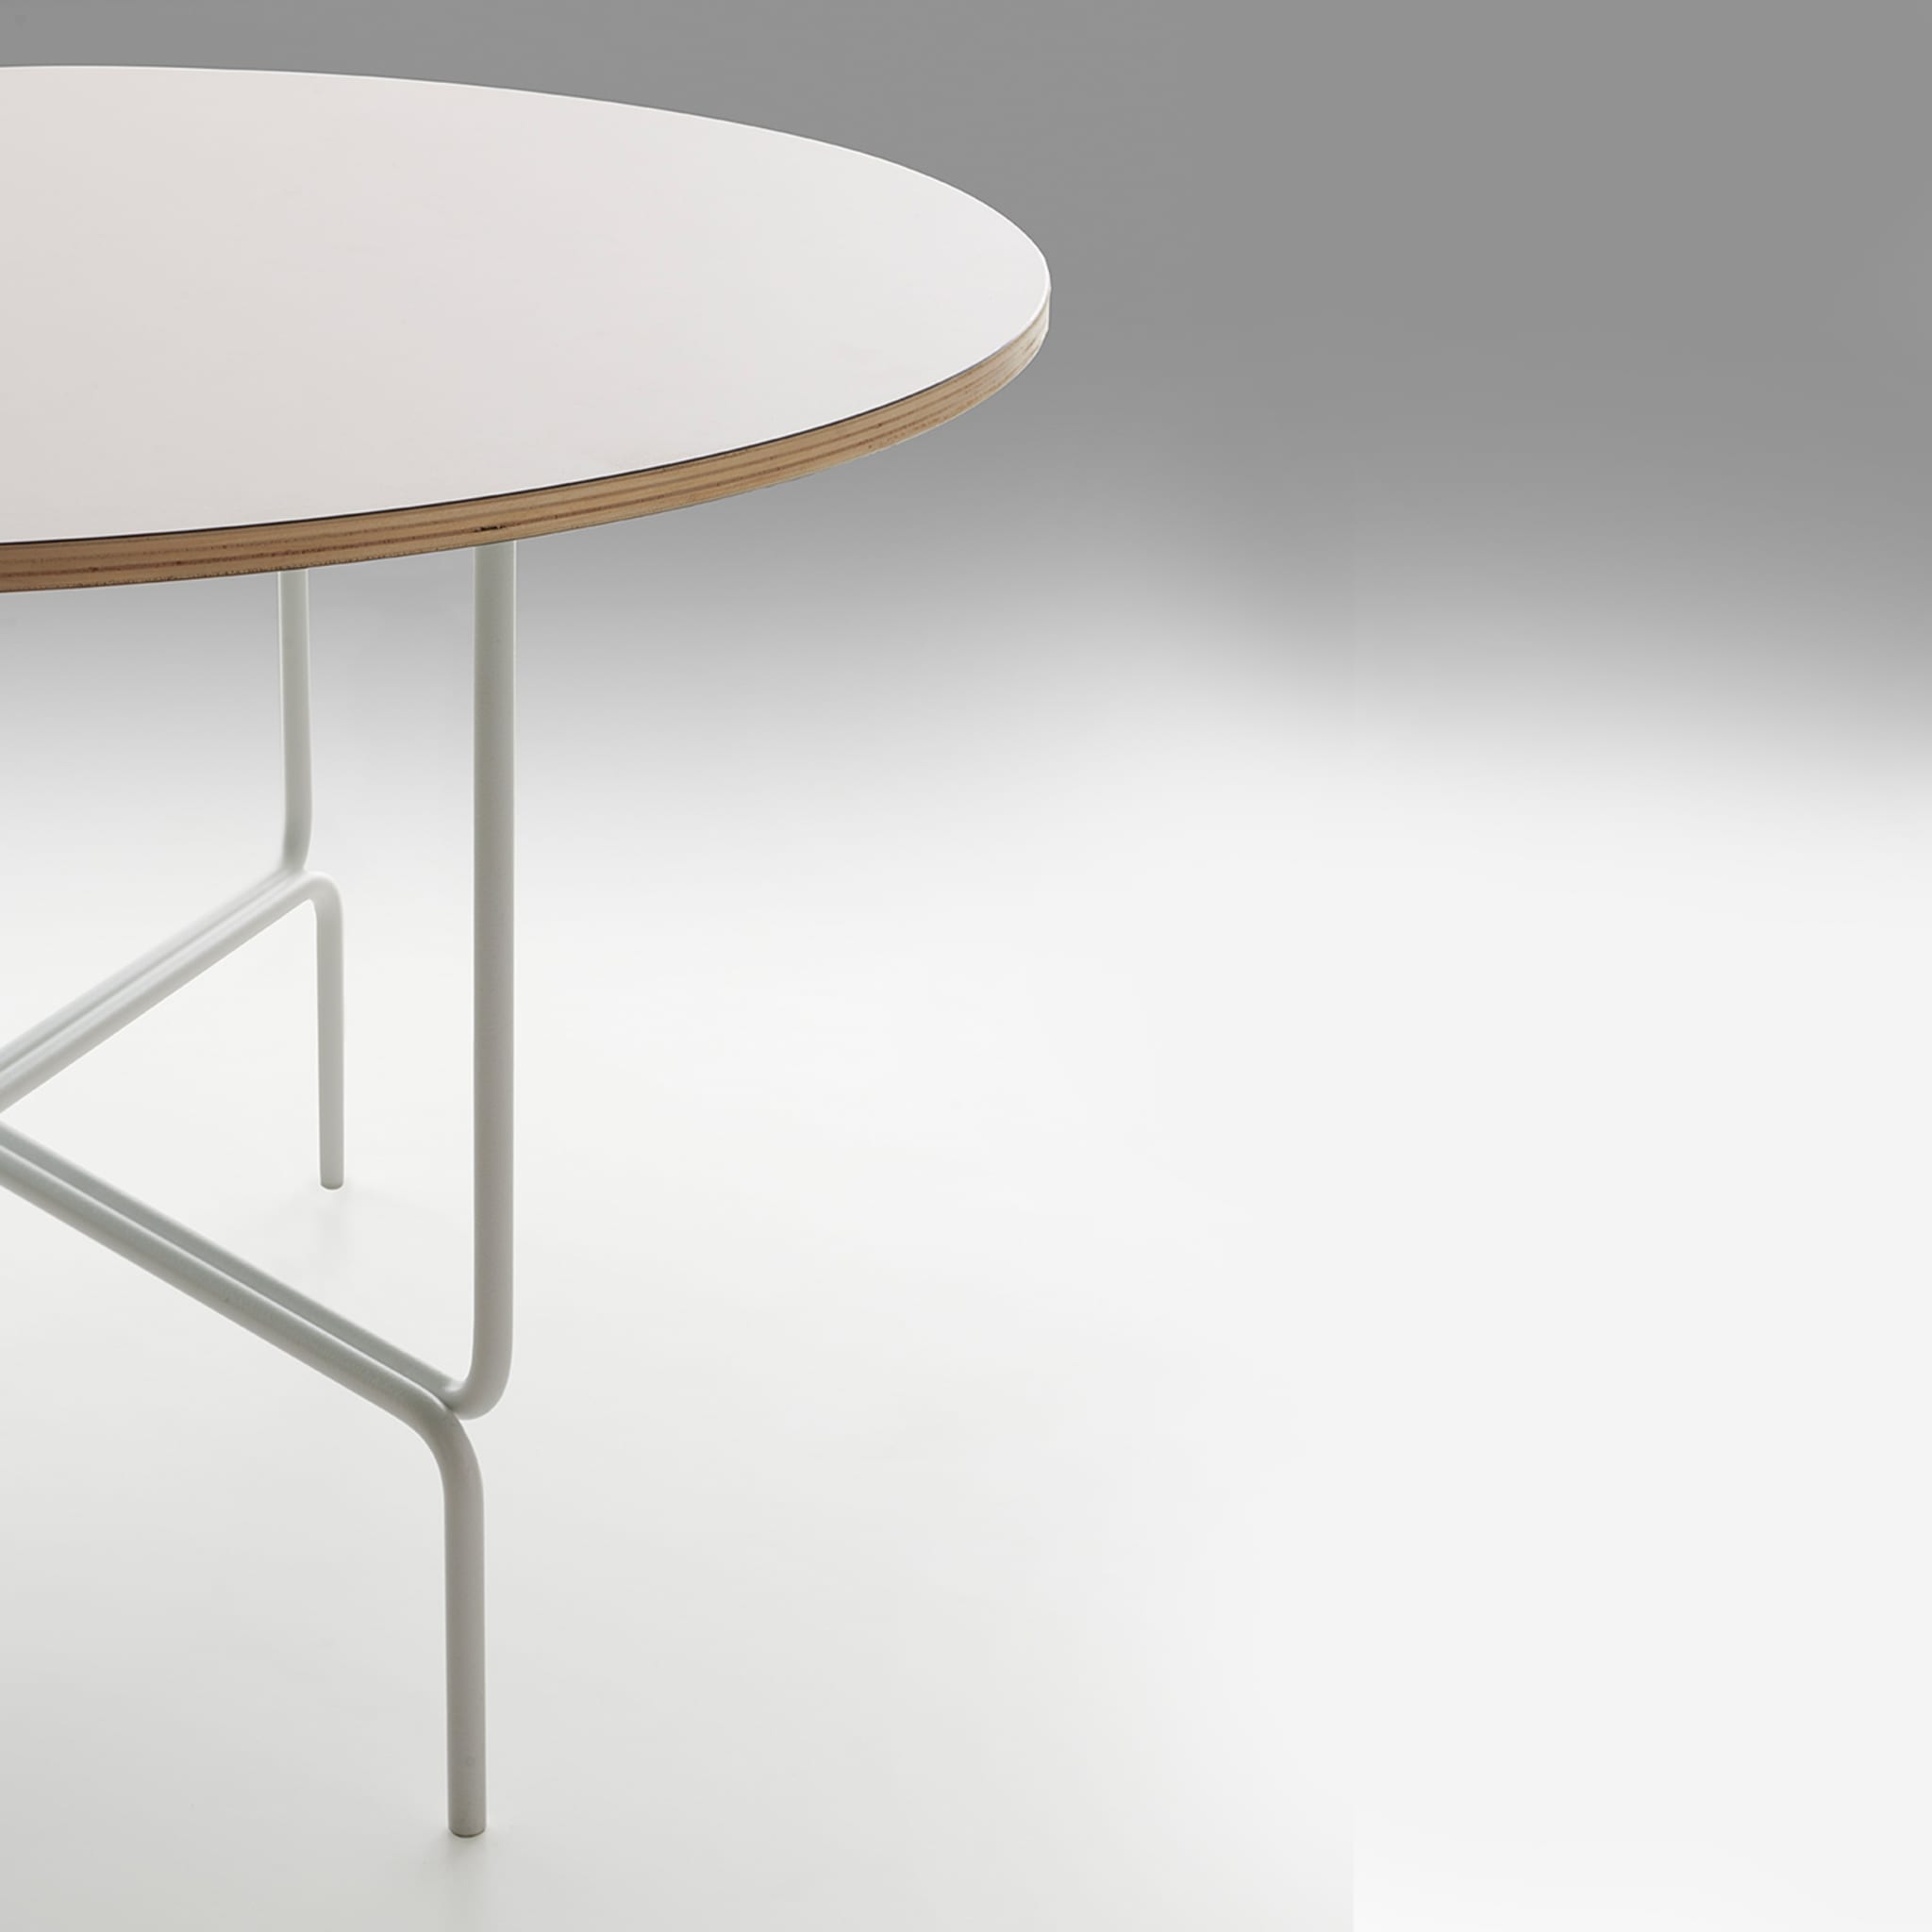 Litta Beige Tall Coffee Table by R. Mangiarotti and I. Suppanen - Alternative view 3